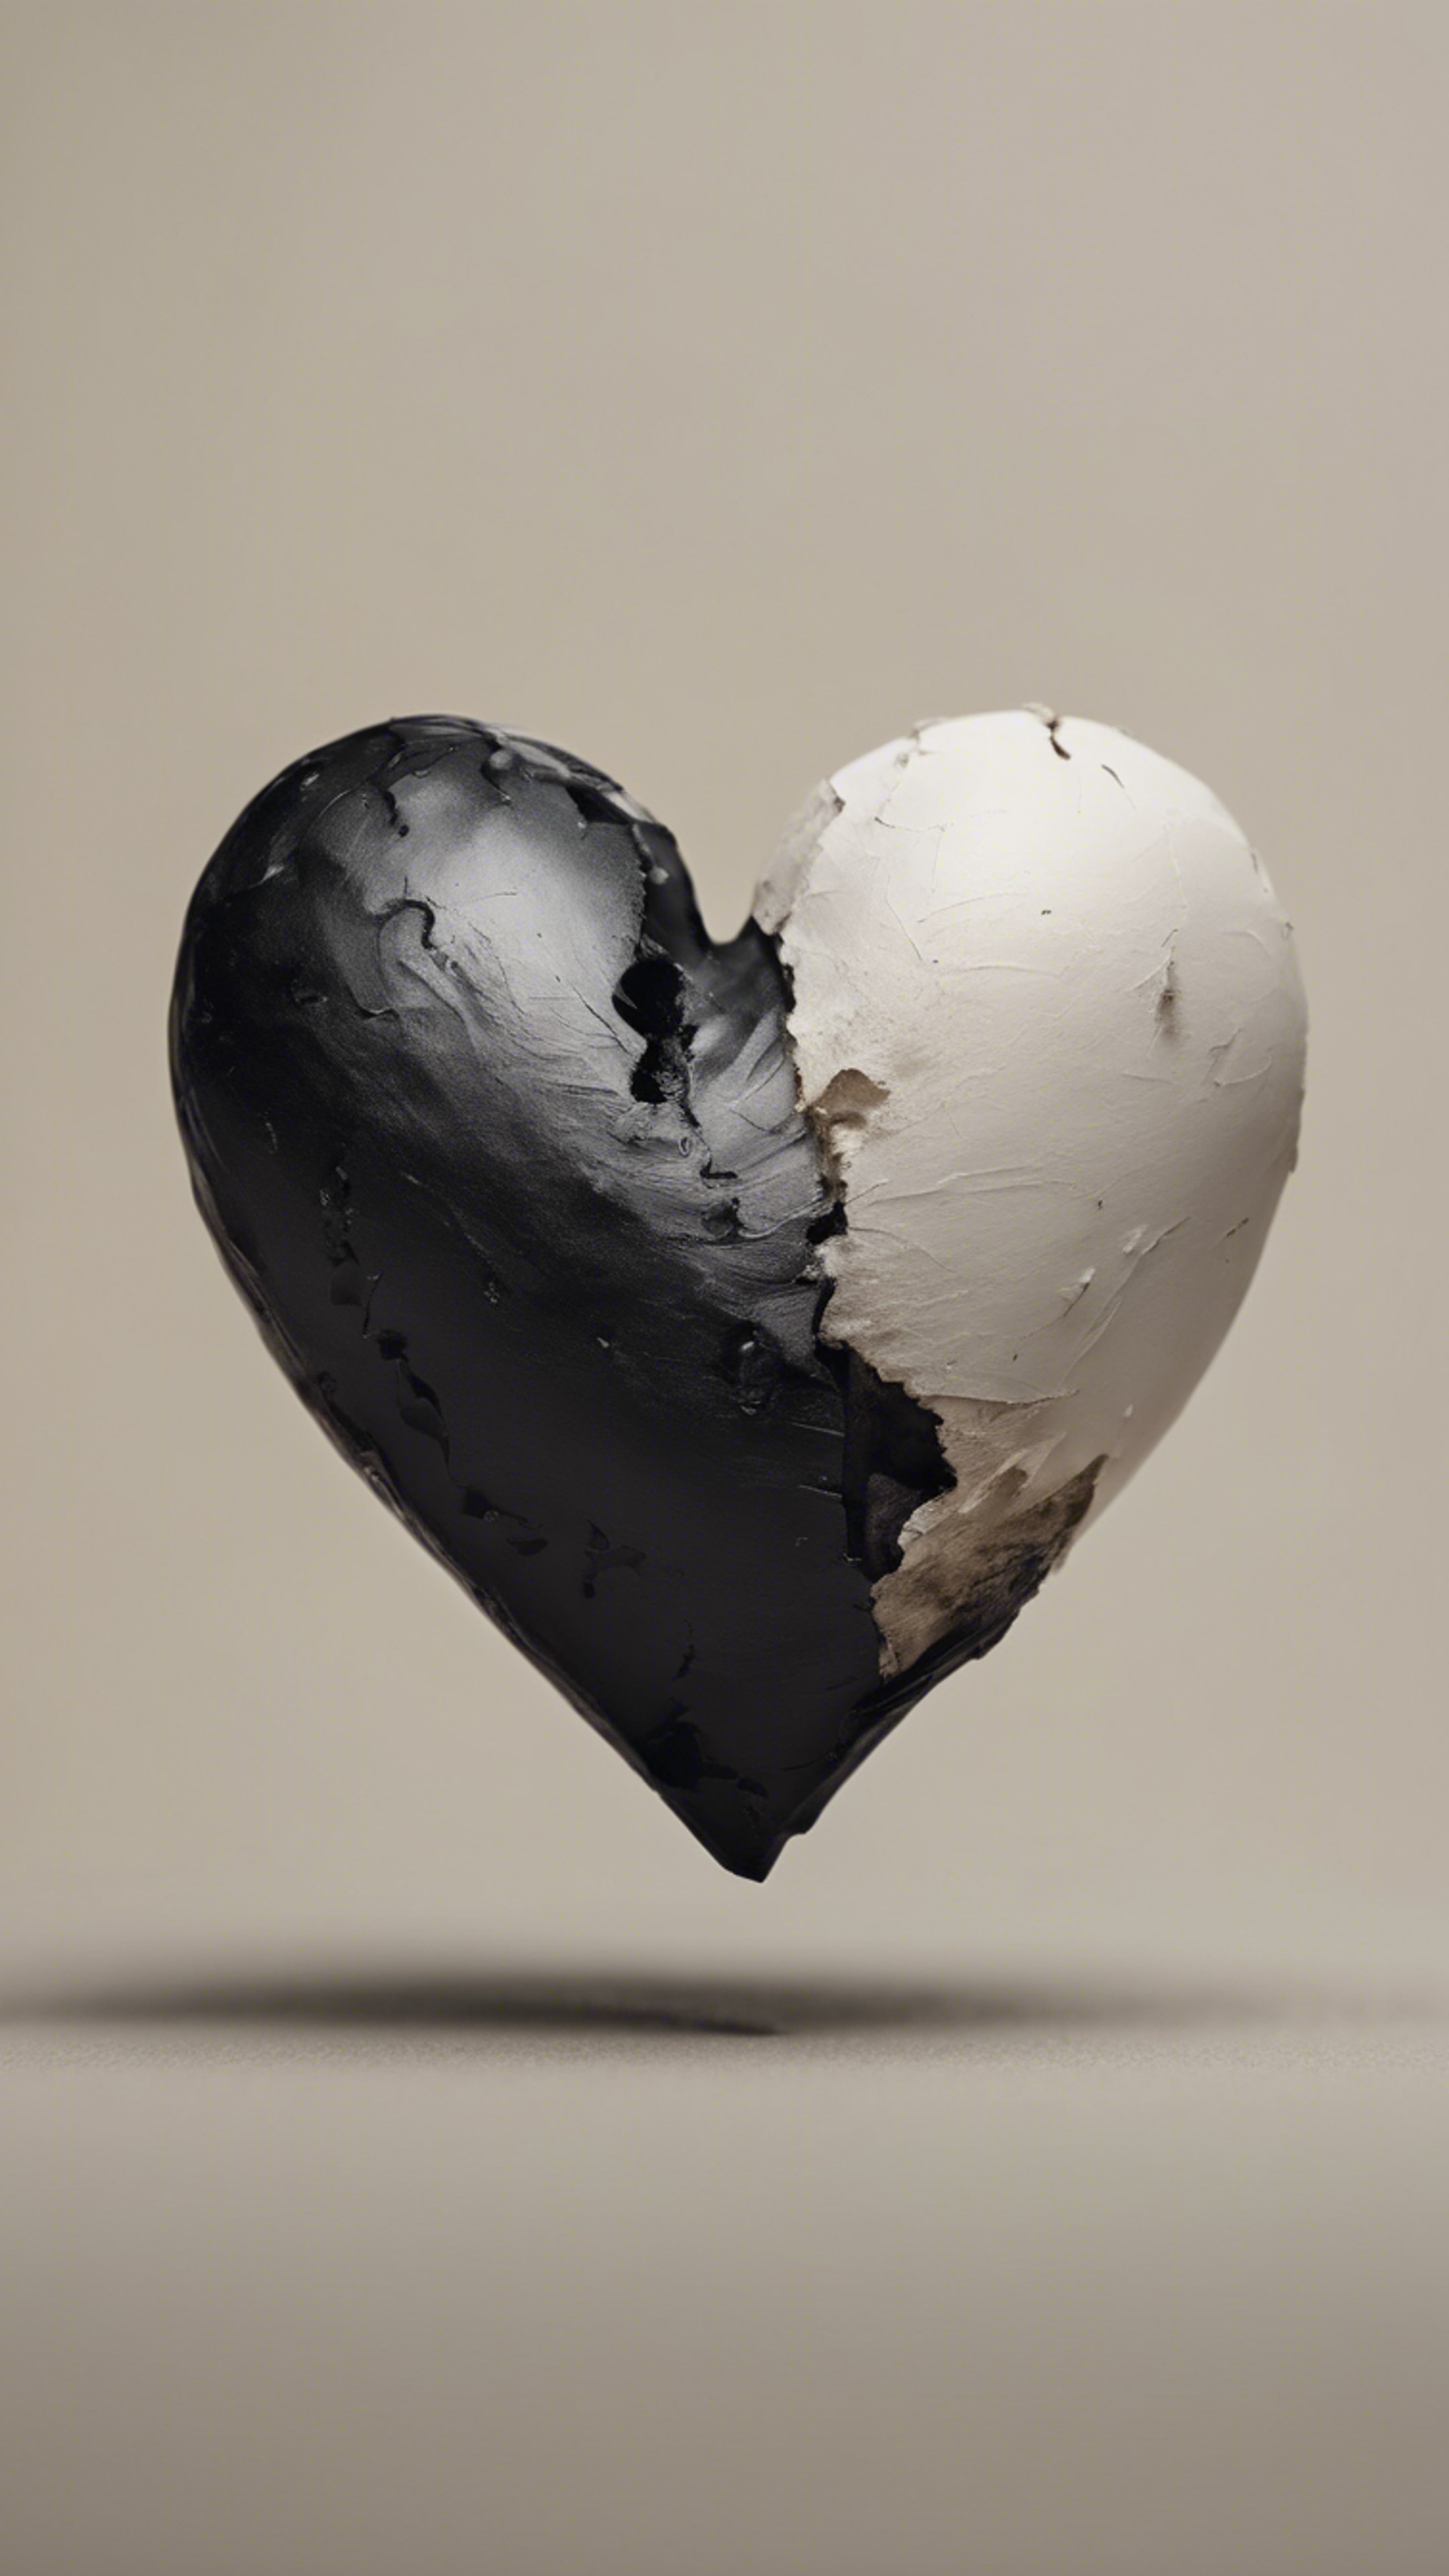 A black heart on one side and a white heart on the other side, against a neutral color background. Divar kağızı[e1ad96bec27b409fa1a8]